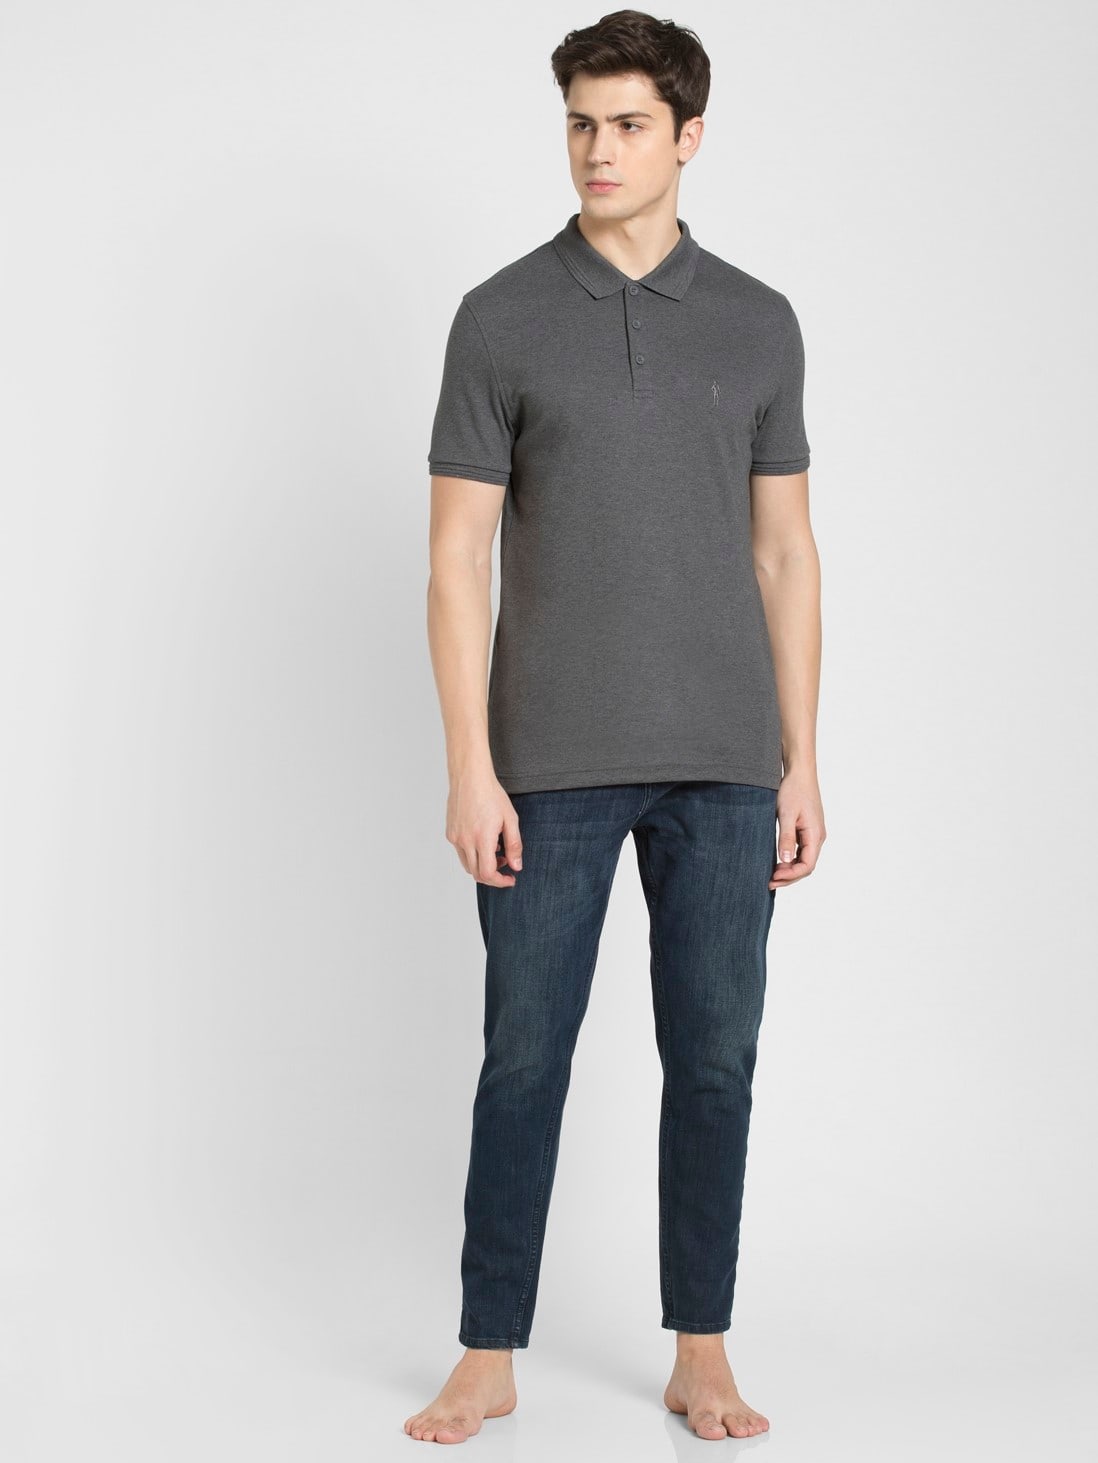 Charcoal Melange Regular Fit Half Sleeve Polo T-Shirt for Men 3912 ...